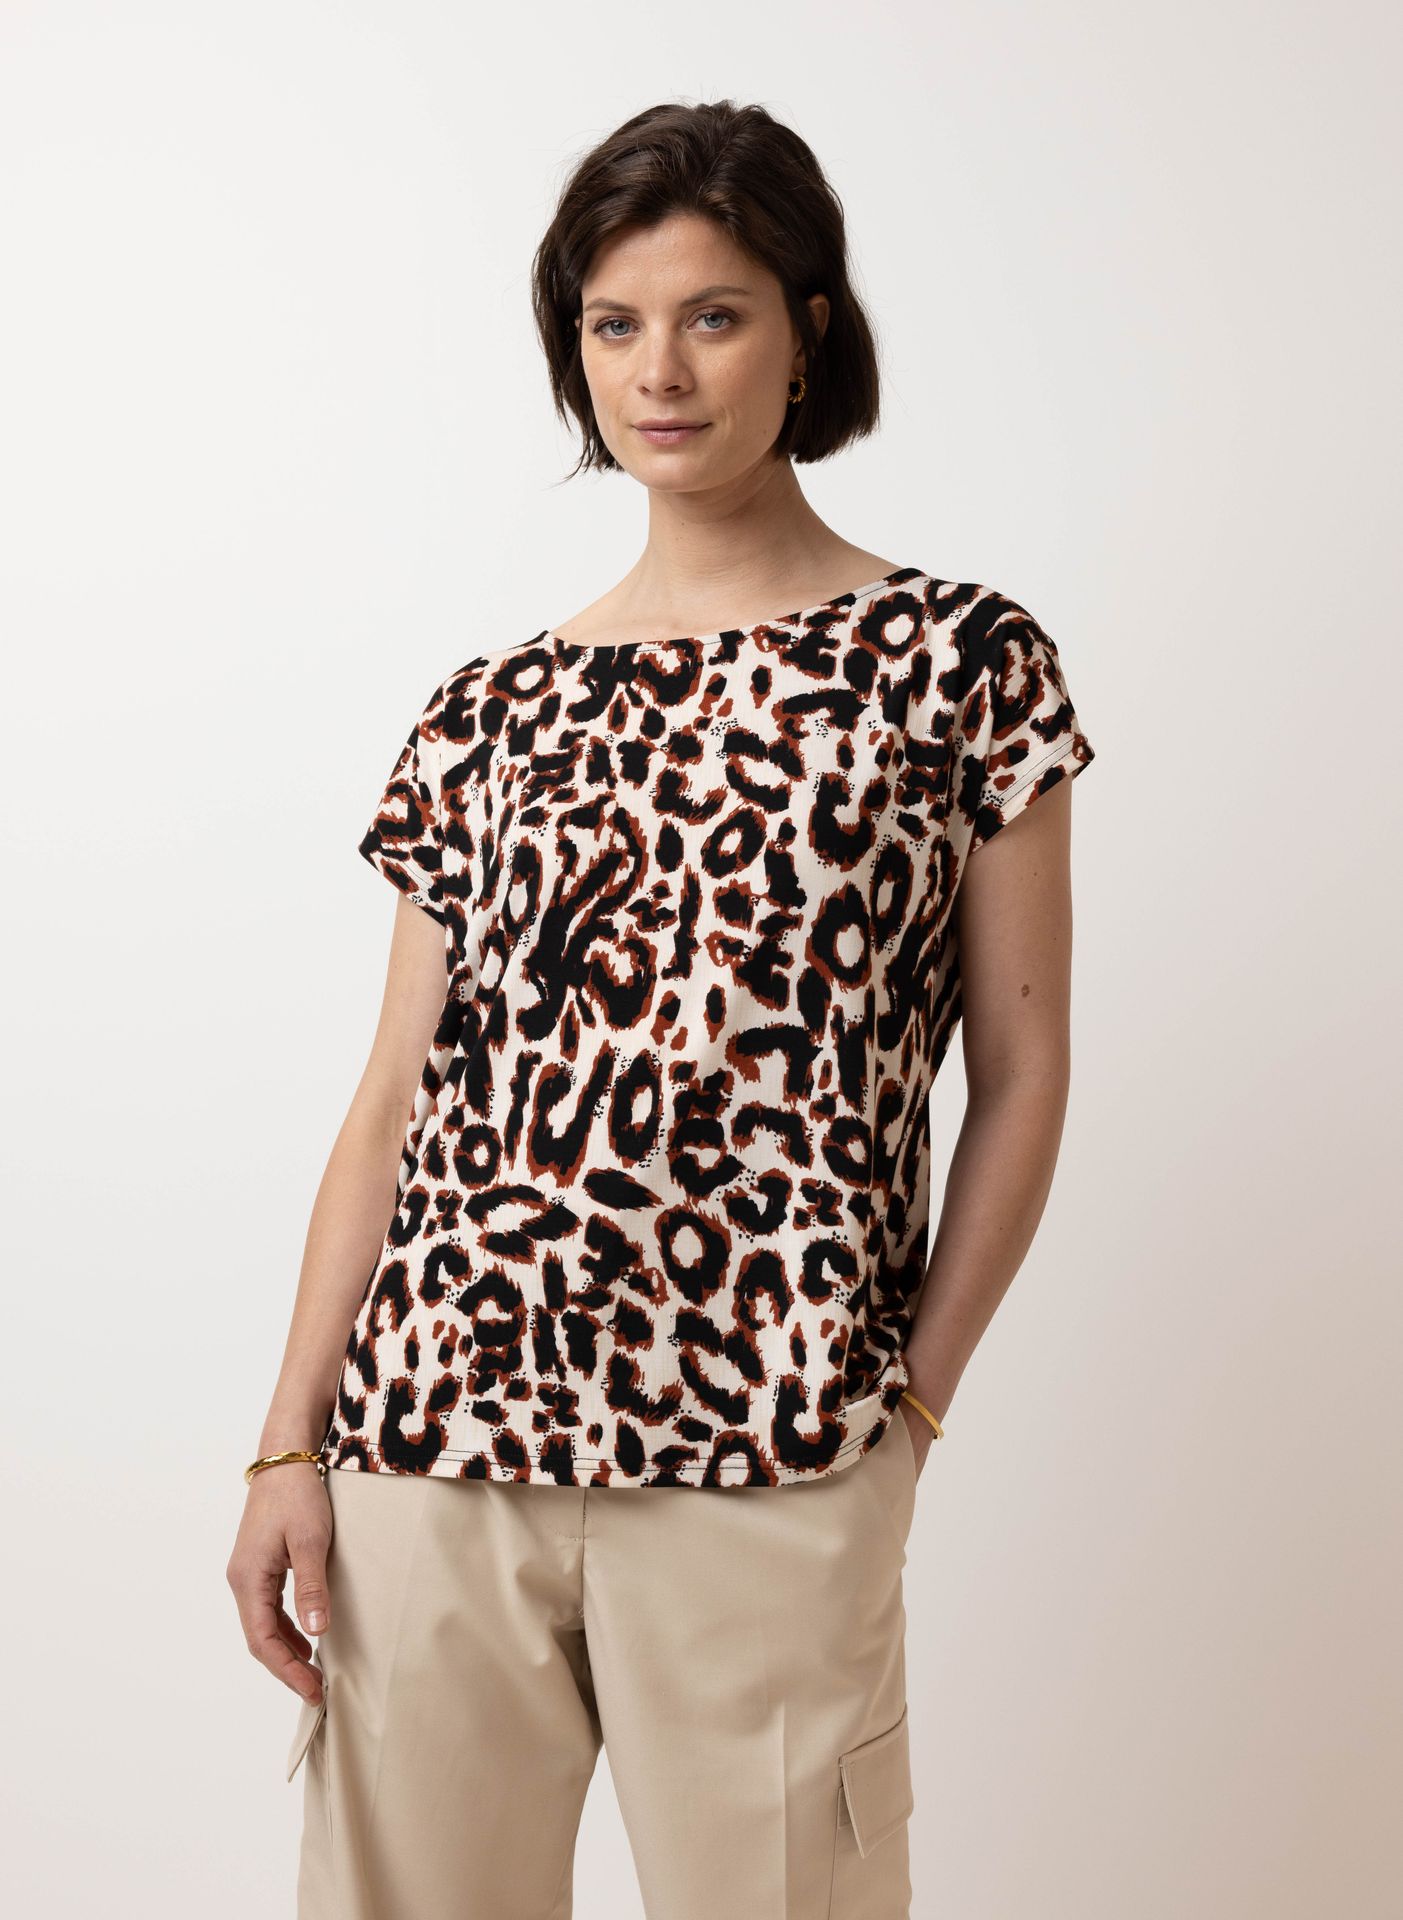 Norah Shirt luipaardprint brown multicolor 212766-220